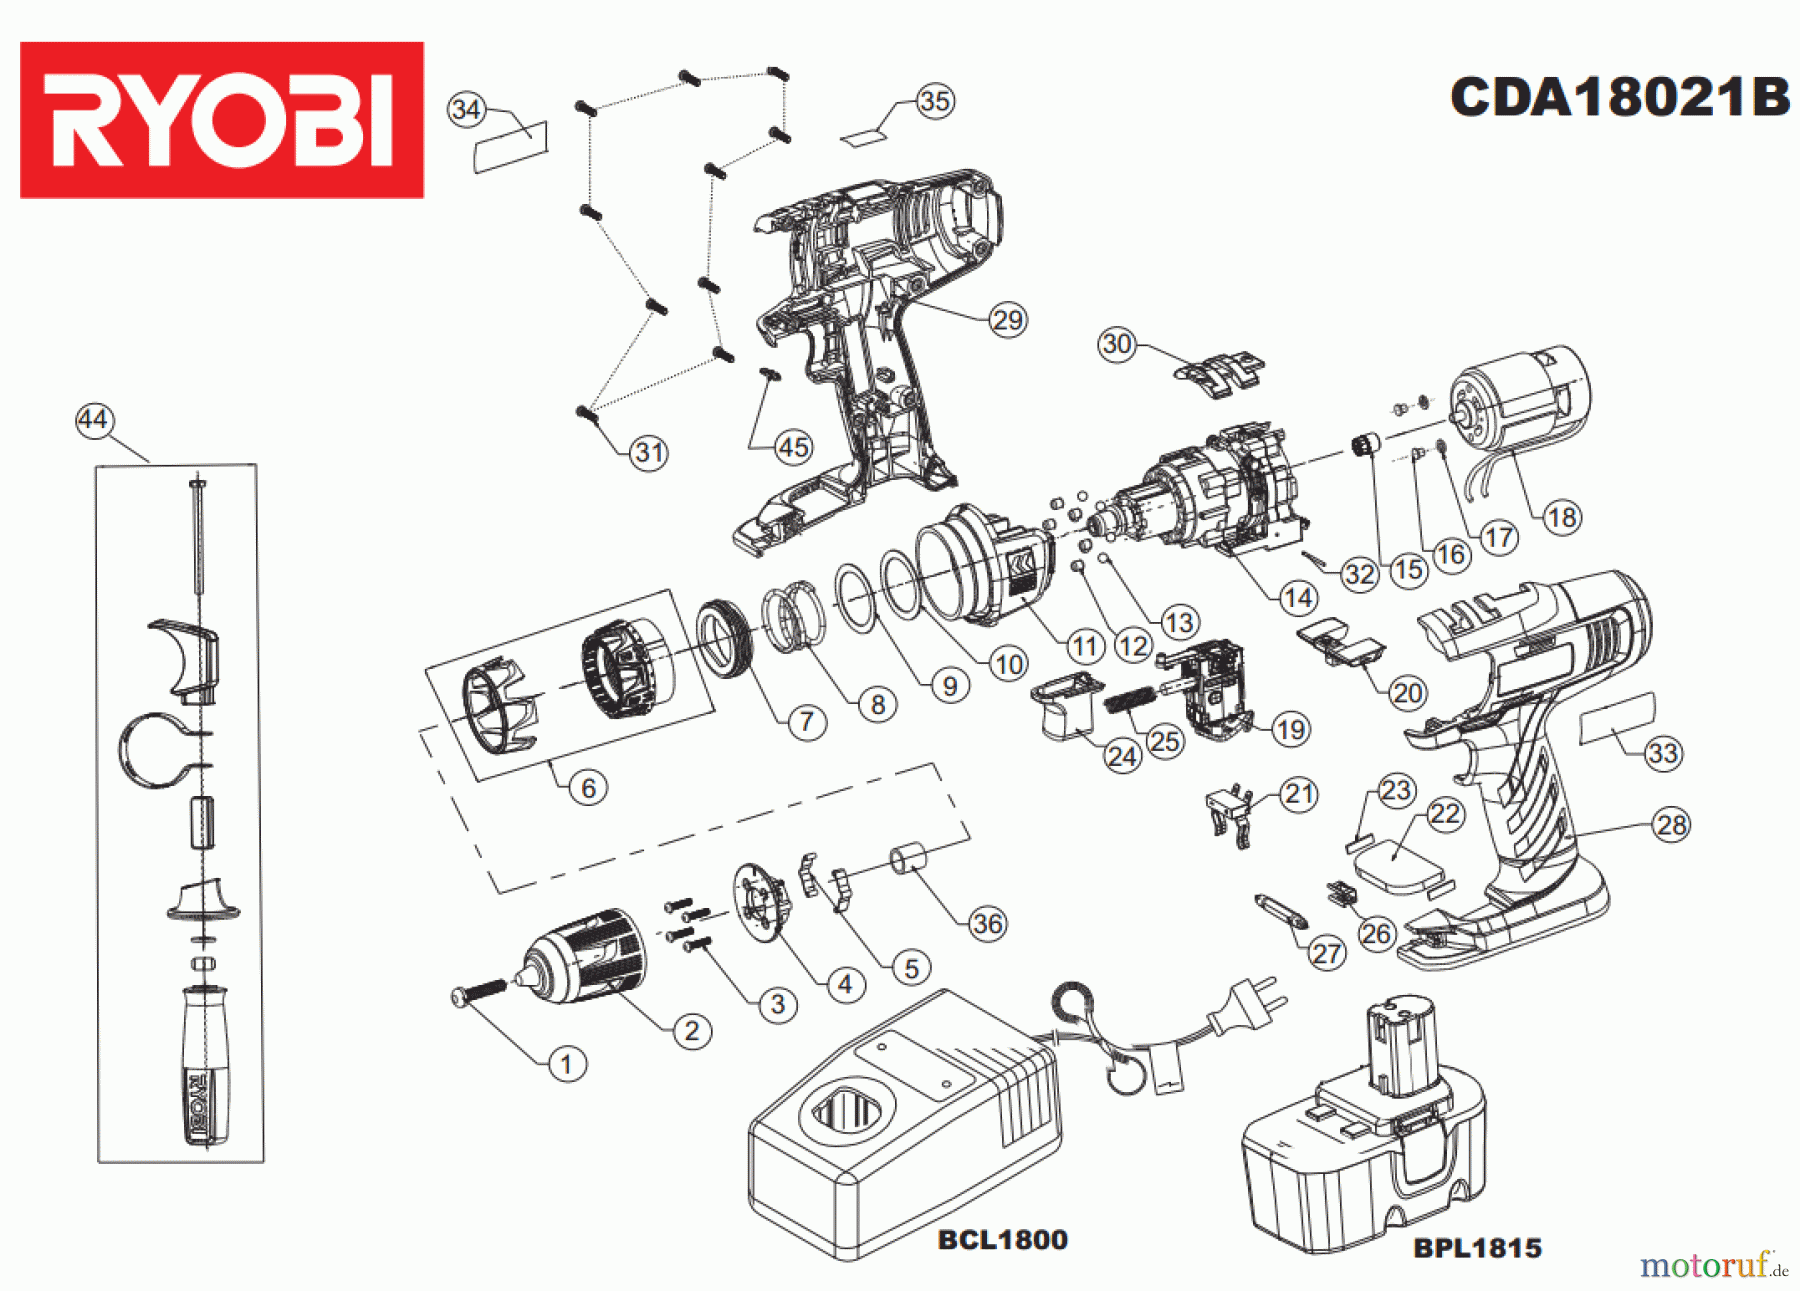  Ryobi (Schlag-)Bohrschrauber Bohrschrauber CDA18021B Seite 1